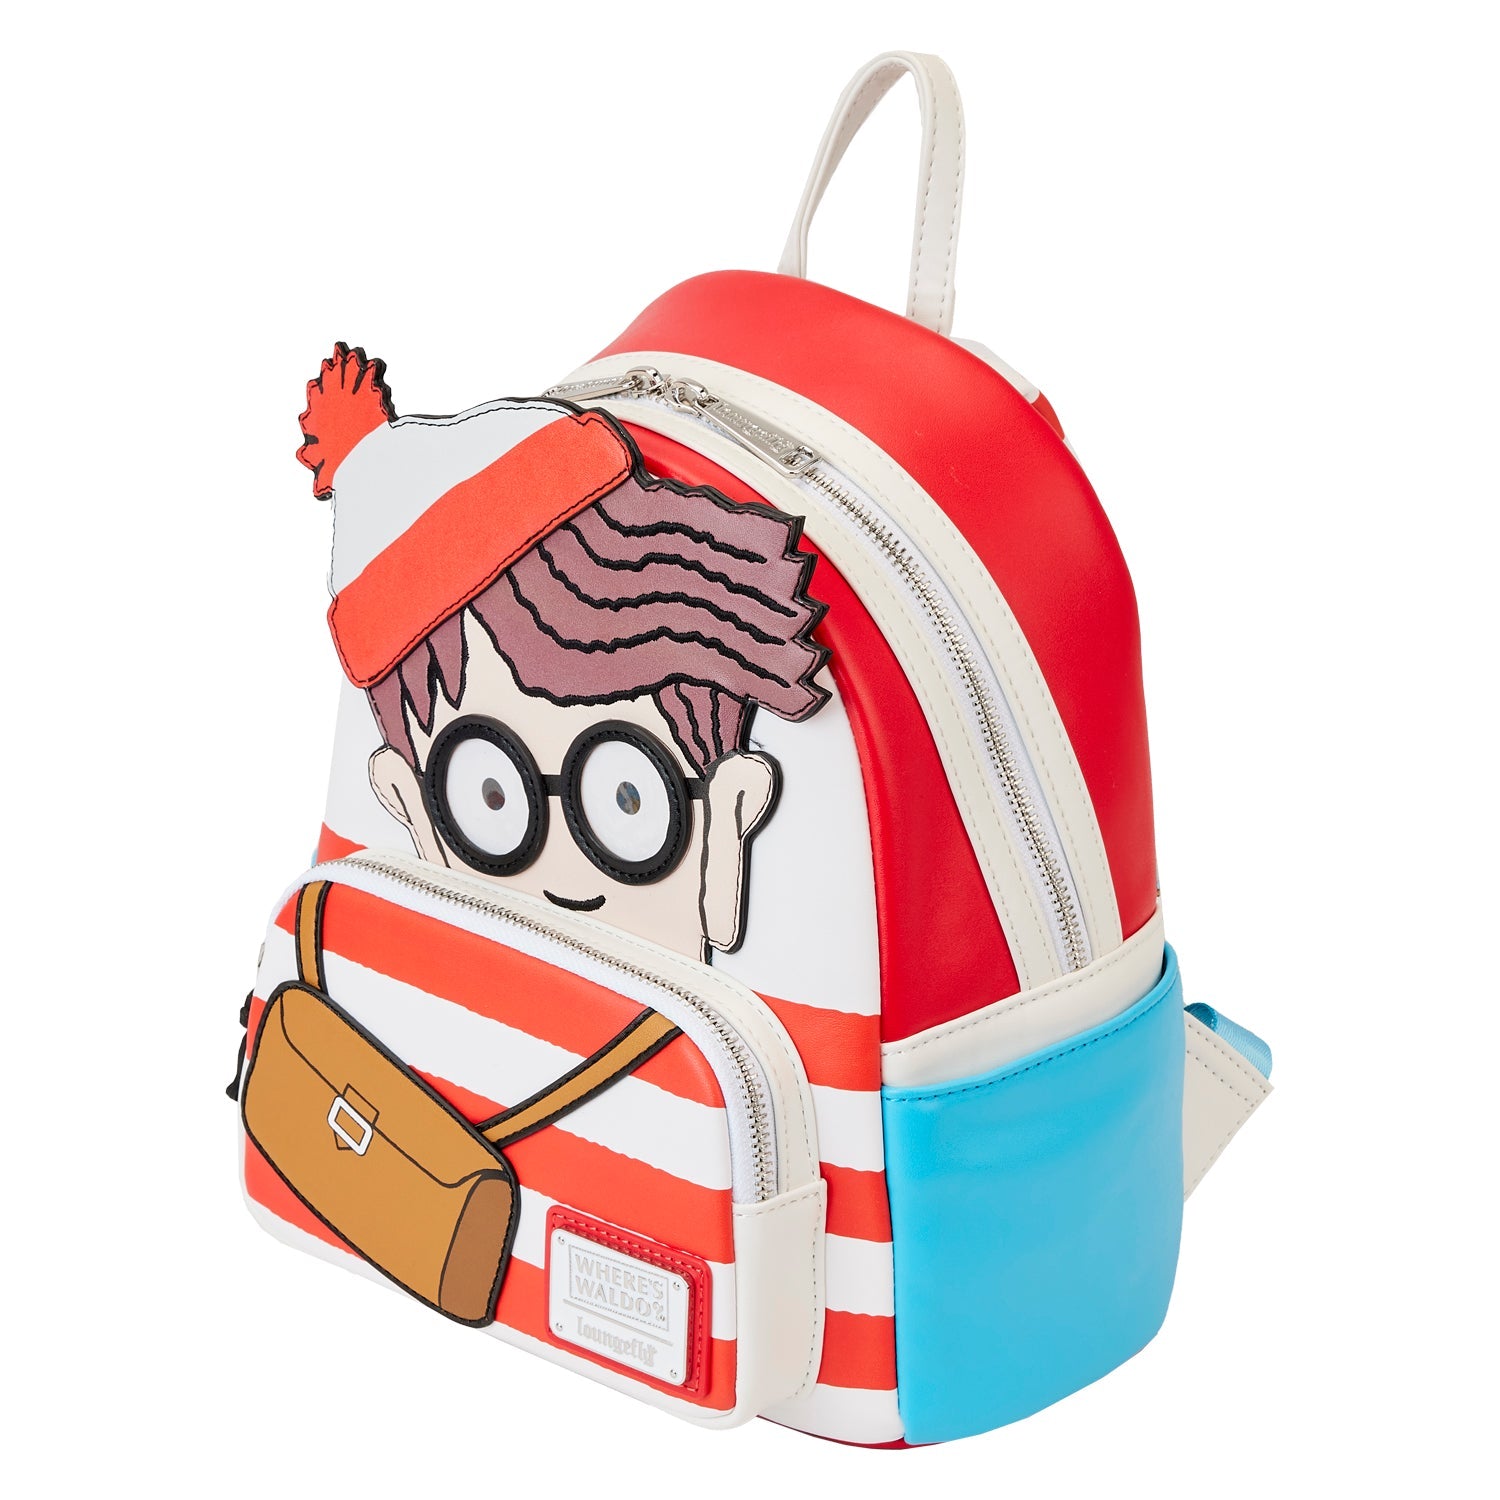 Loungefly x Where's Wally? (Waldo) Cosplay Mini Backpack - GeekCore